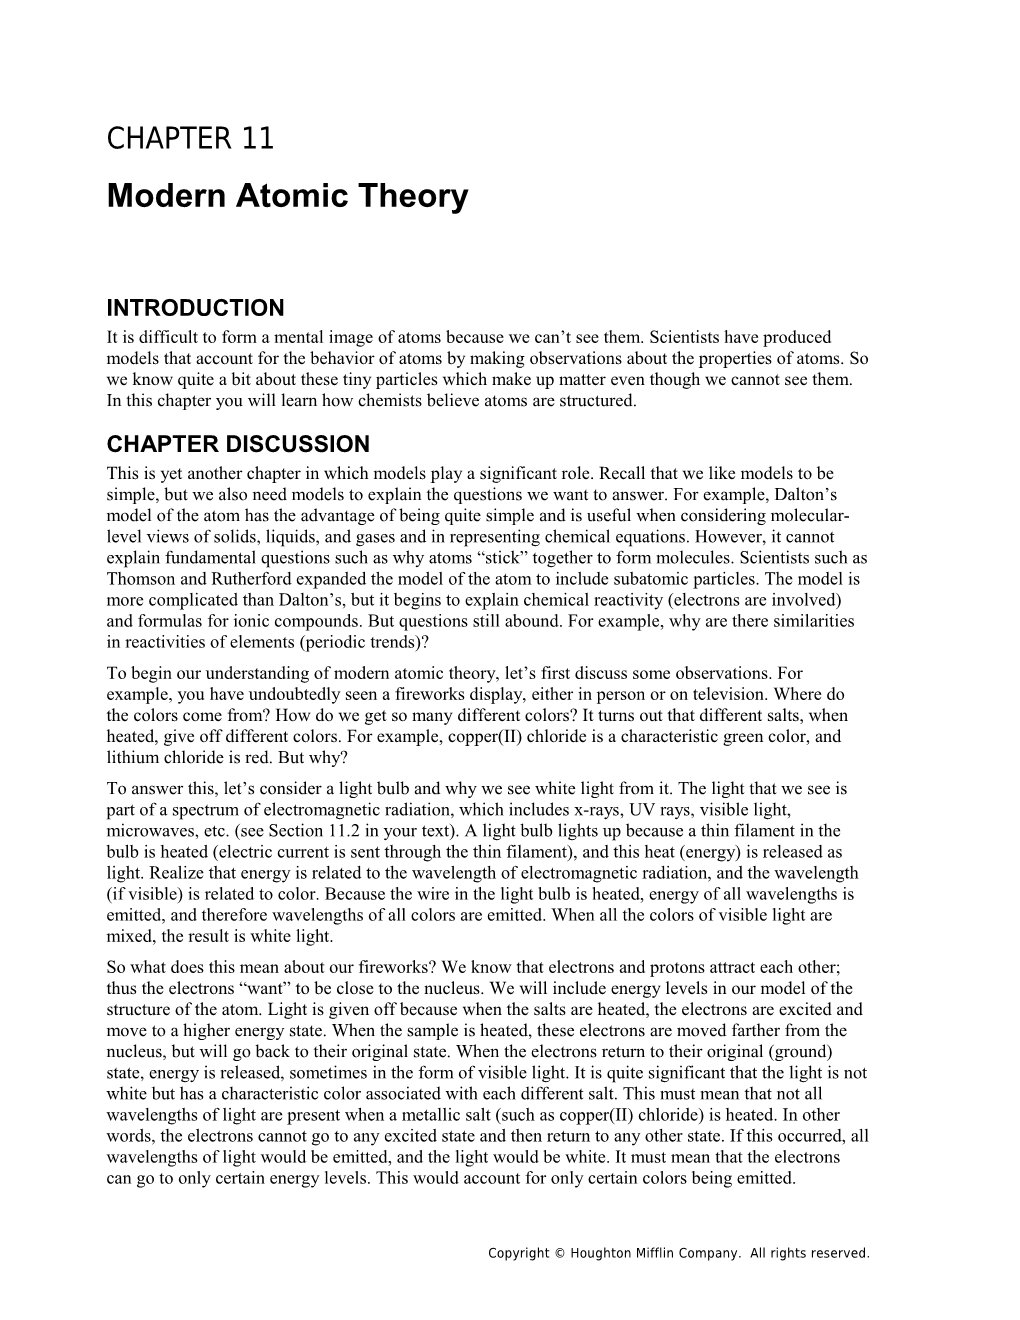 Chapter 11: Modern Atomic Theory 1